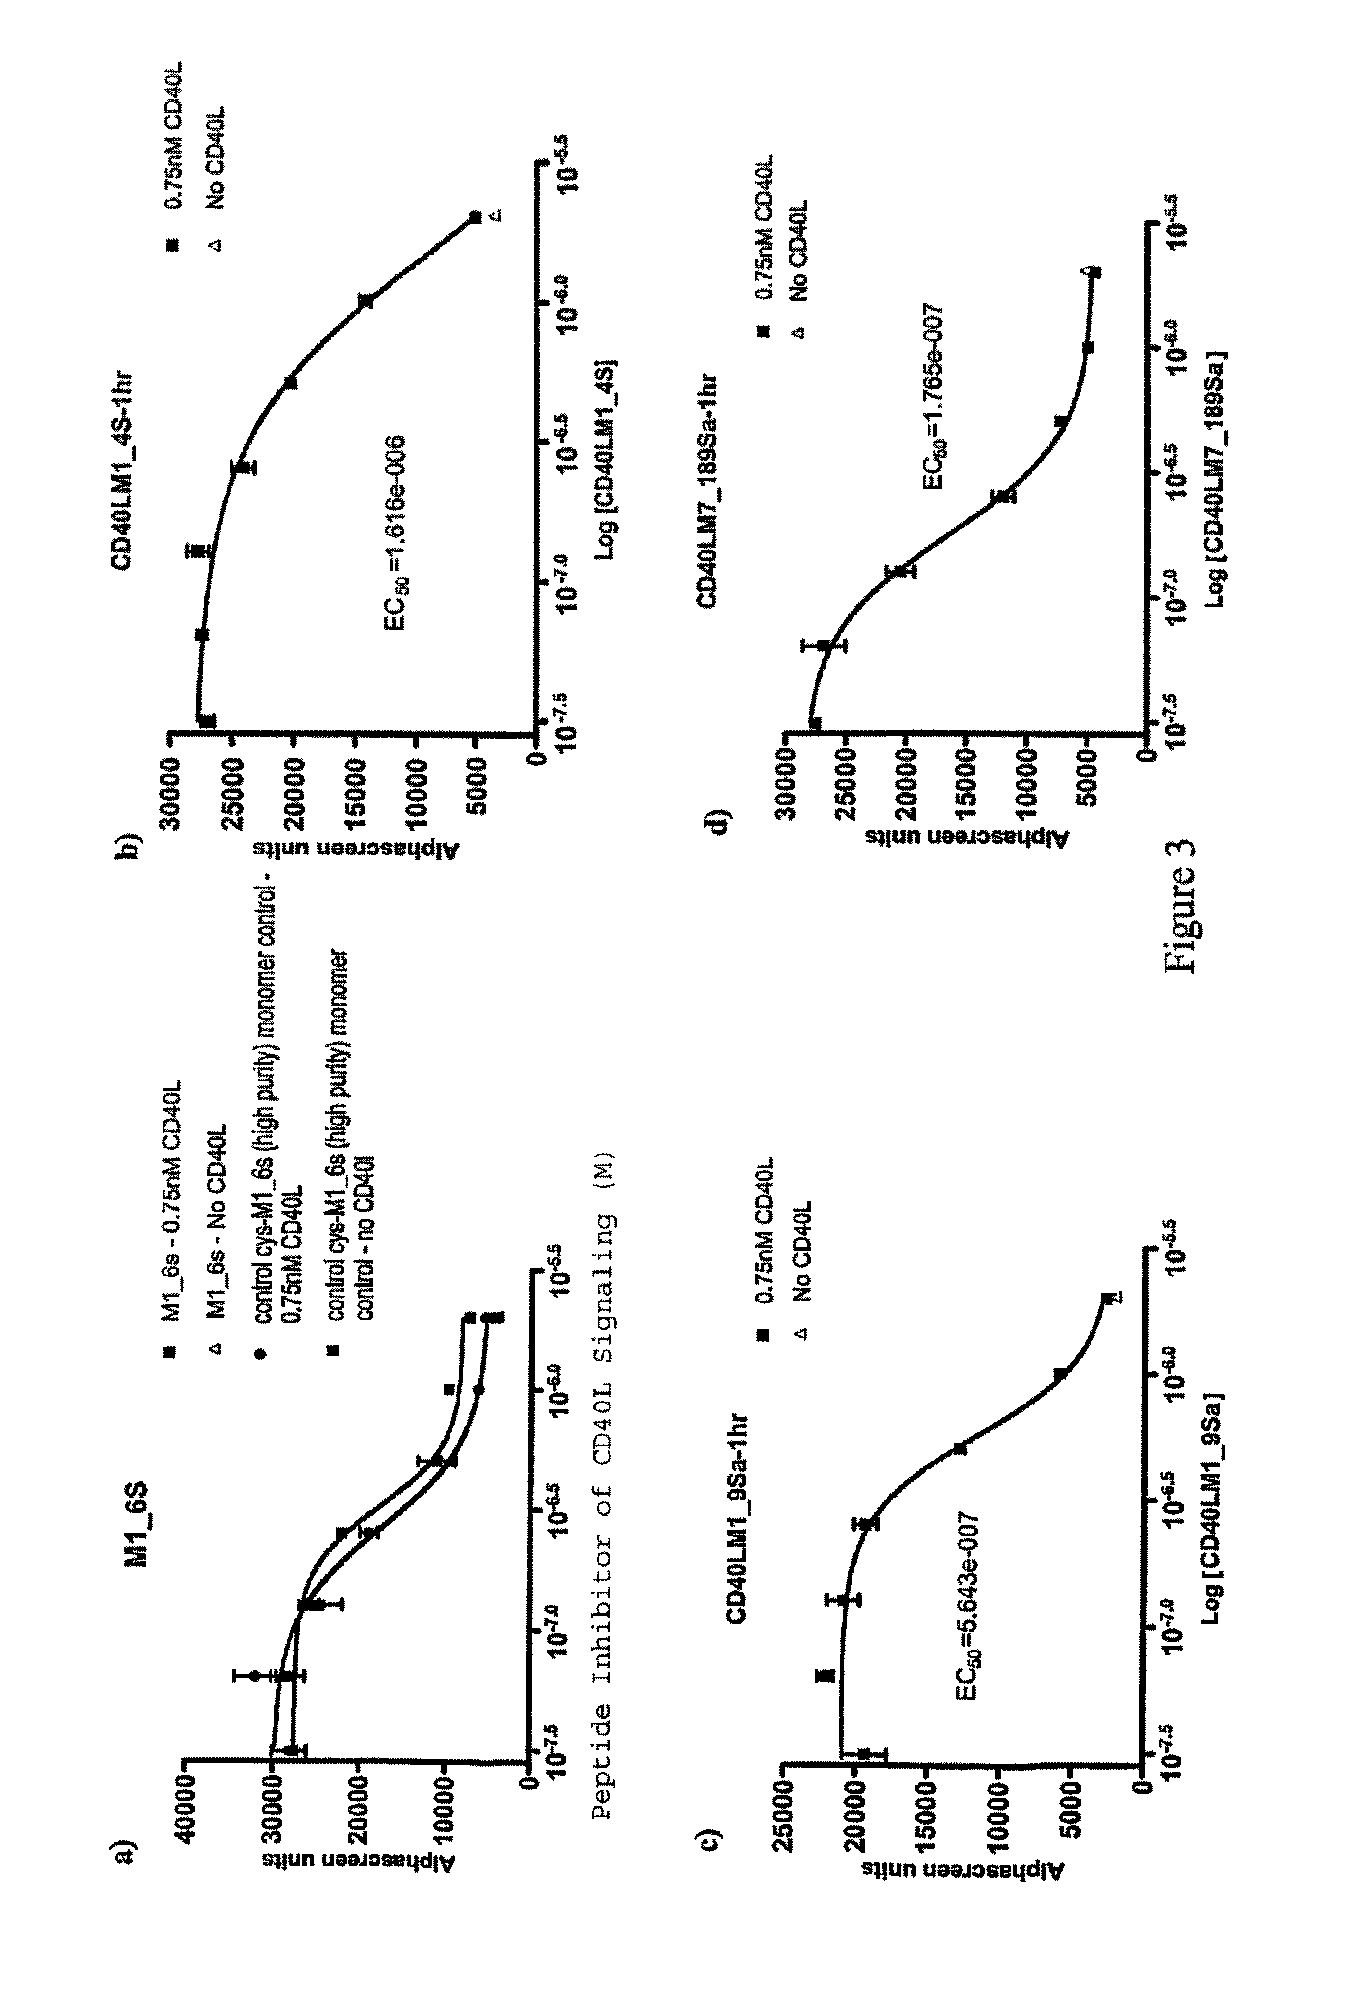 CD40-L Inhibitory Peptides